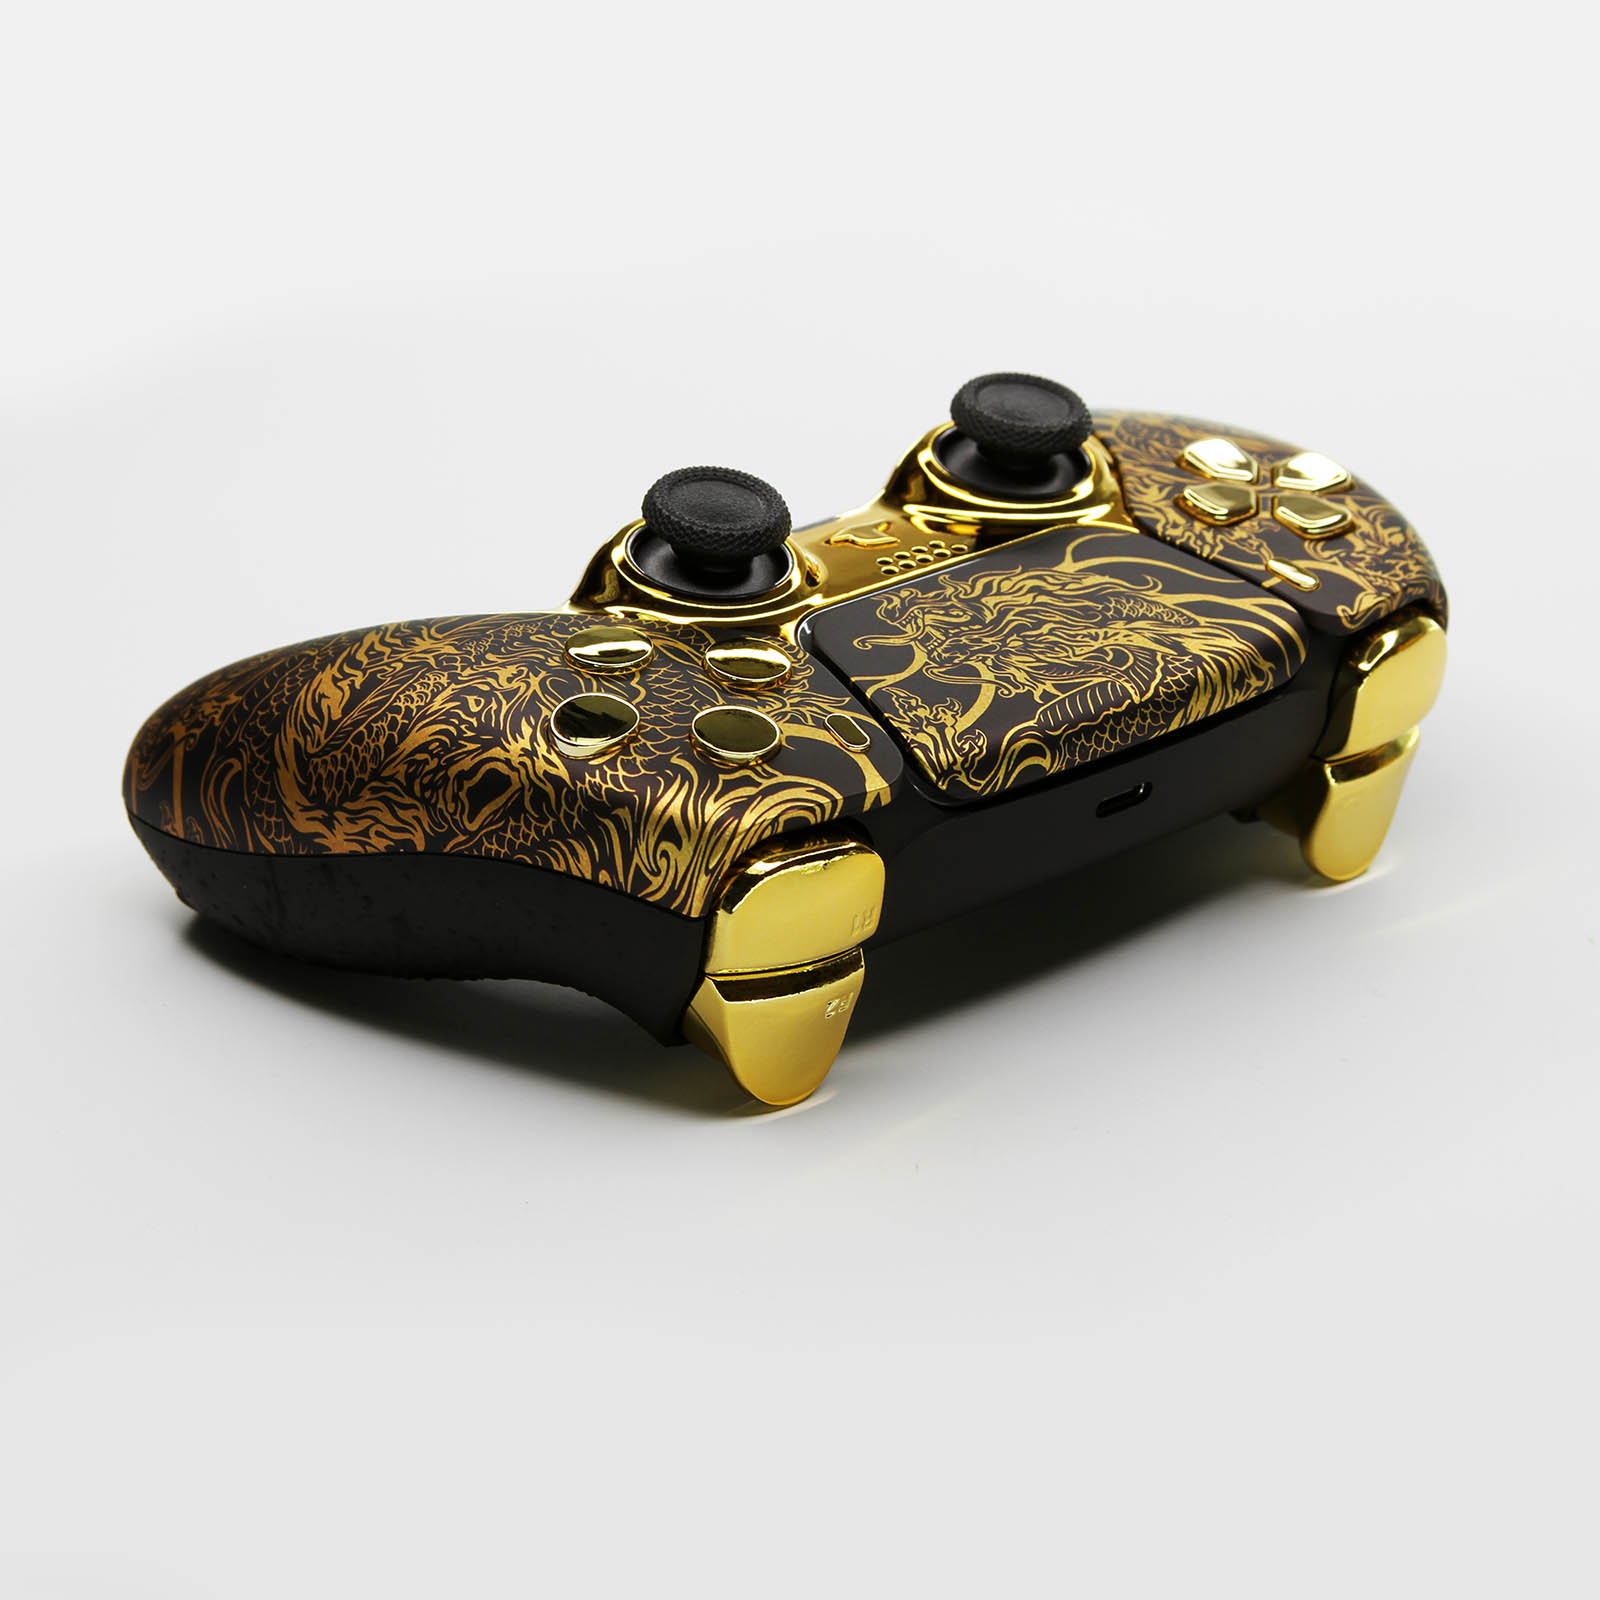 Customised PS5 Dualsense Controller - Golden Dragon Design *NEW